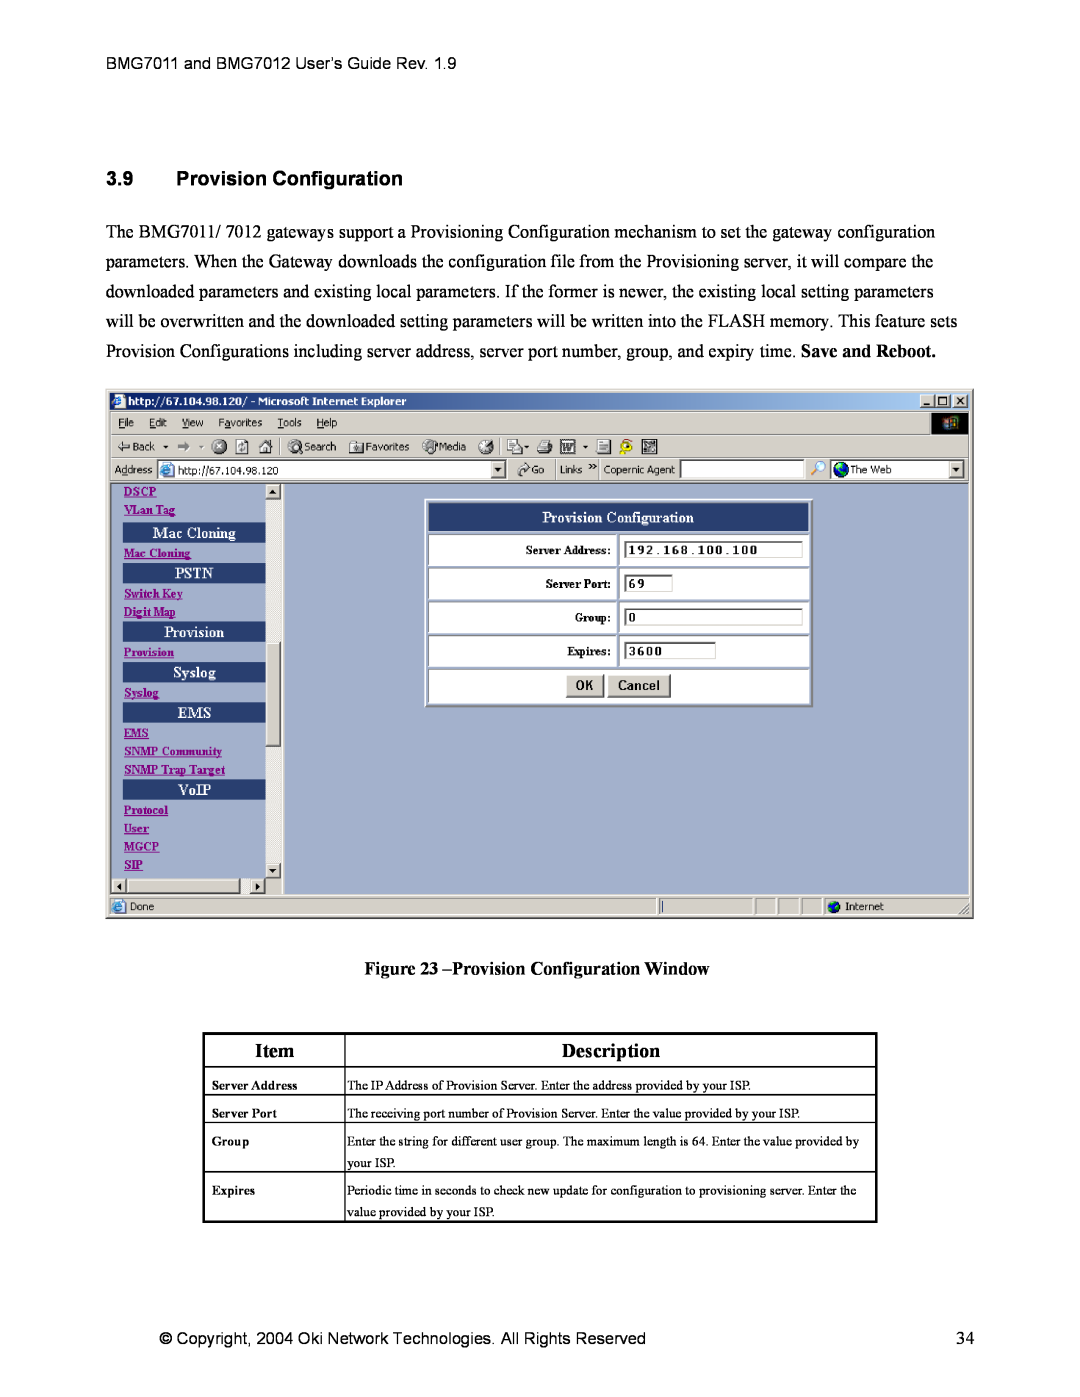 Oki BMG7012, BMG7011 manual 3.9Provision Configuration, ProvisionConfiguration Window, Item, Description 